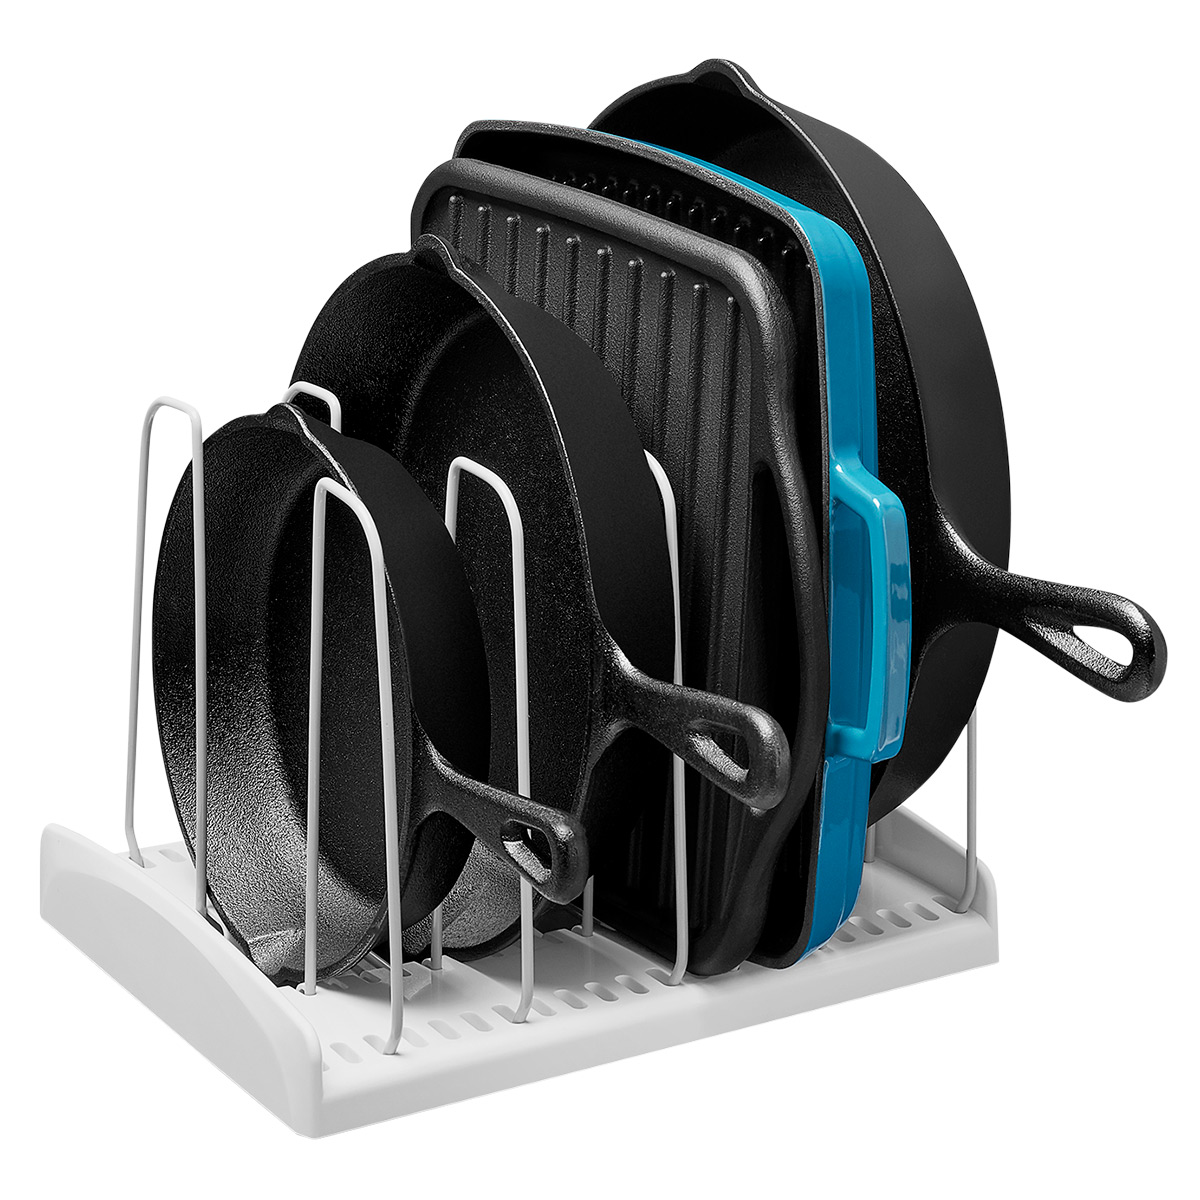 YouCopia 09041-01-WHT StoreMore Adjustable Cookware Rack Pan Organizer 6 diviers Renewed 